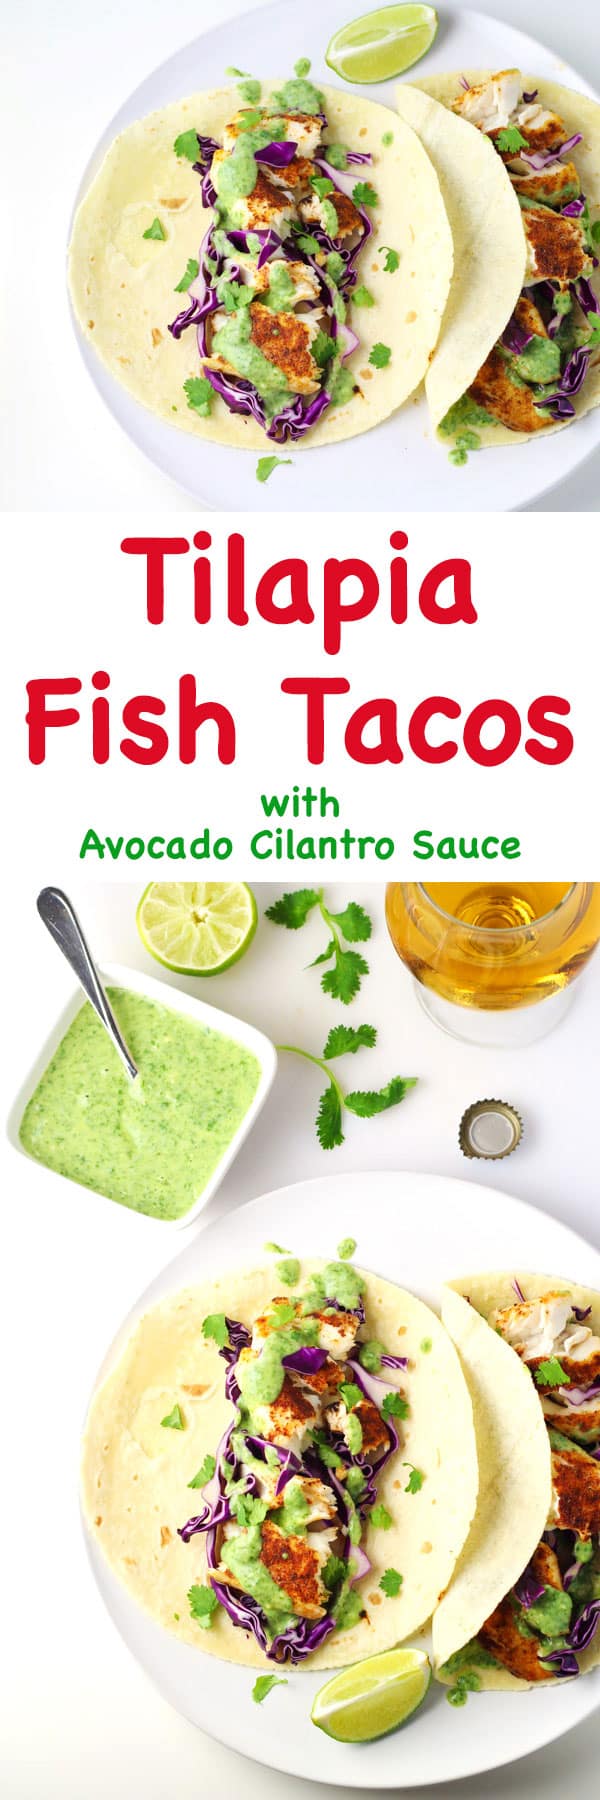 Tilapia Fish Tacos with Avocado Cilantro Sauce